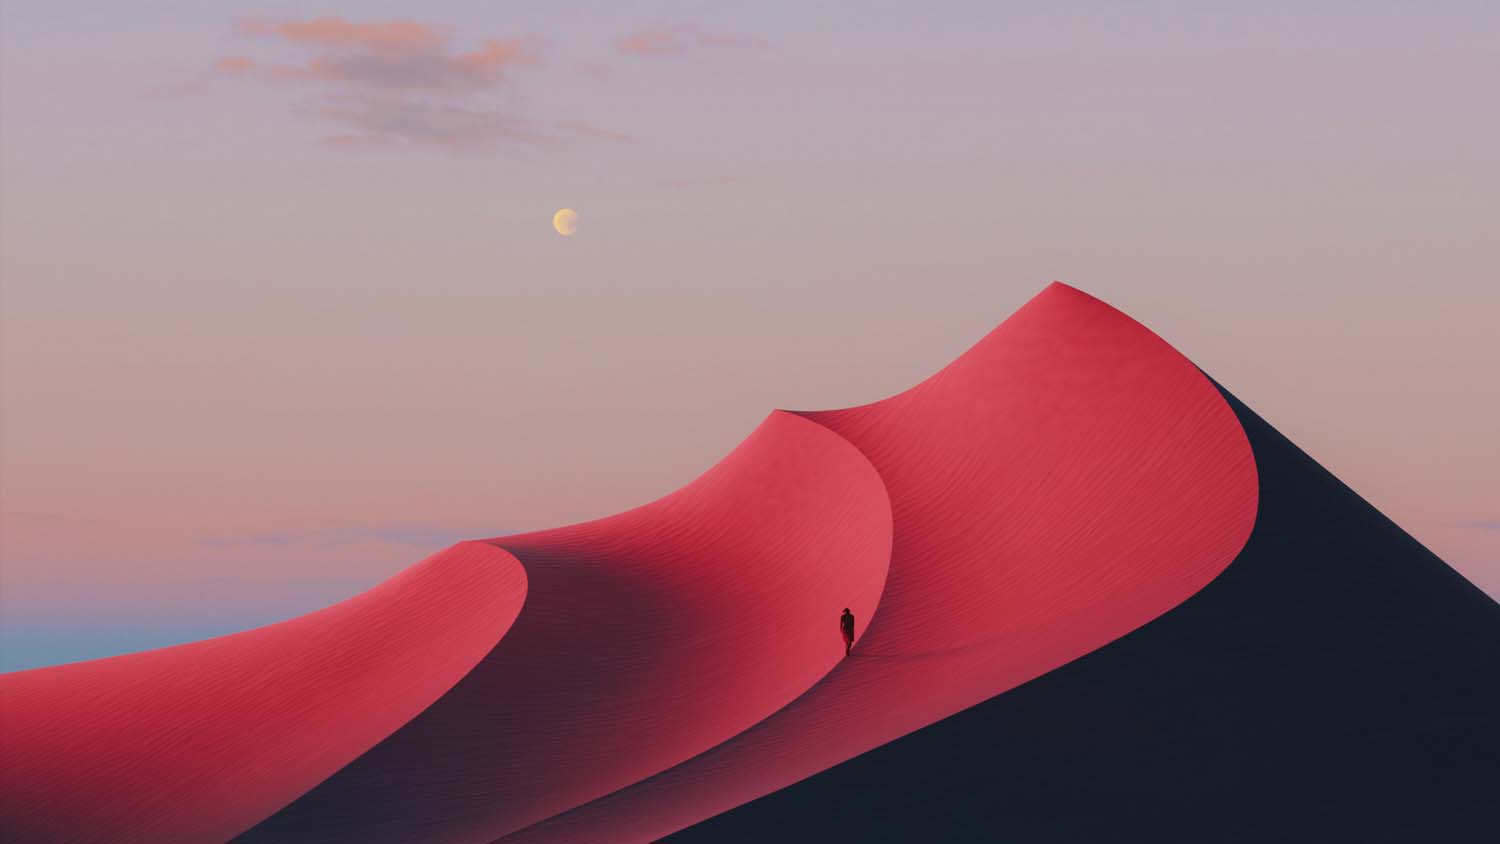 digital art artwork illustration nature landscape desert men alone Moon sky sand